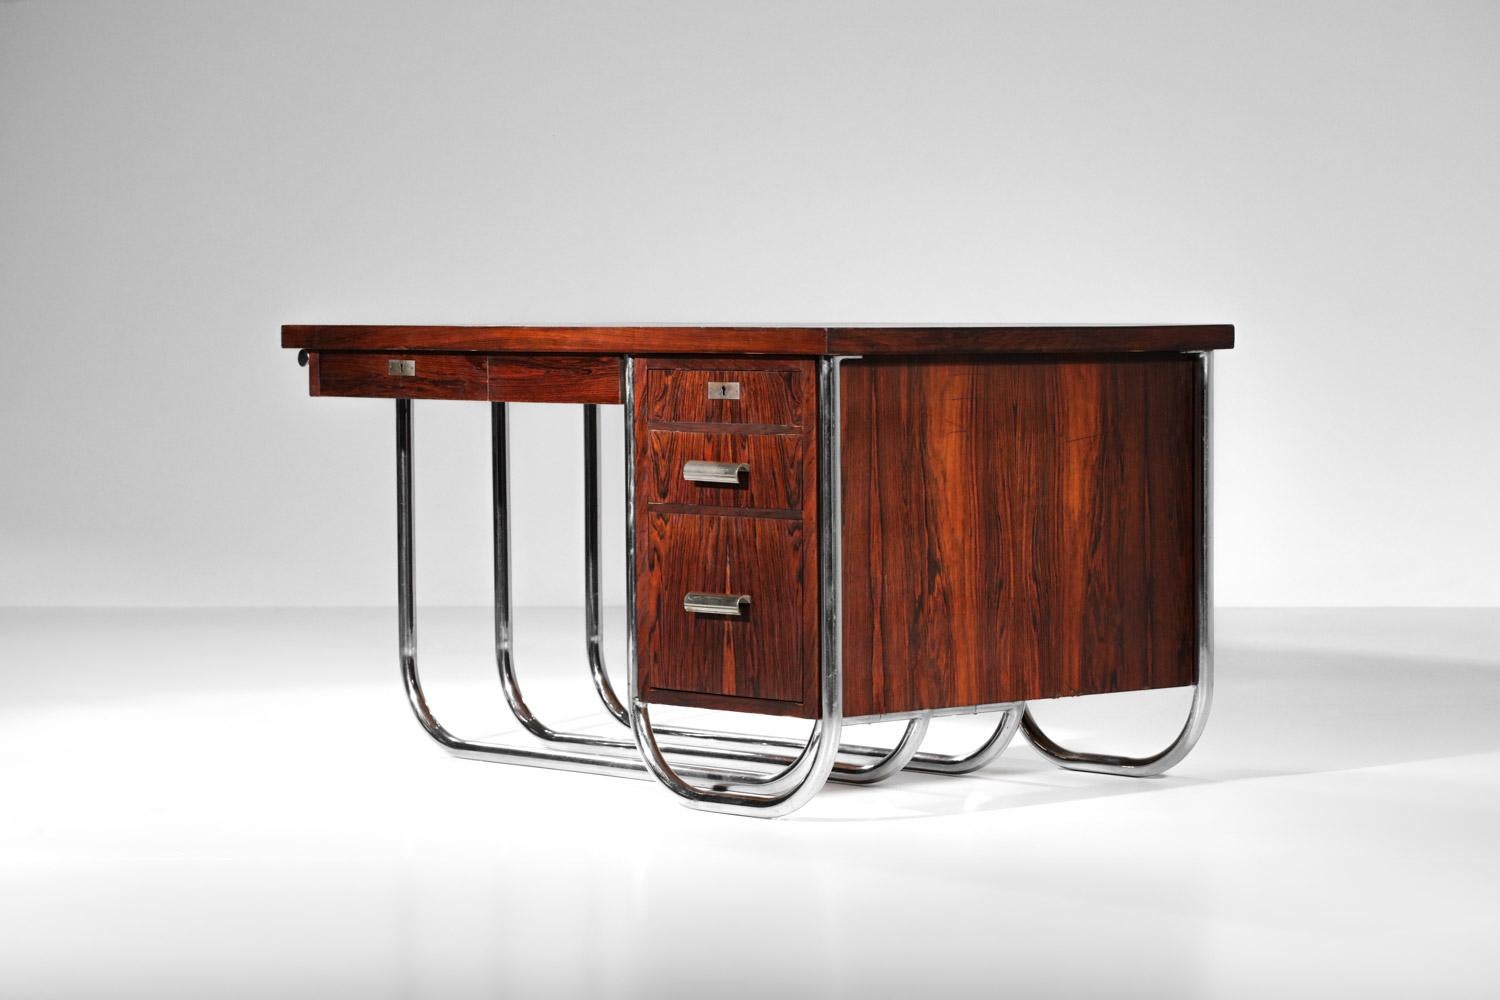 Modernist Desk in Solid Wood 40s / 50s Bauhaus Style Vintage For Sale 5